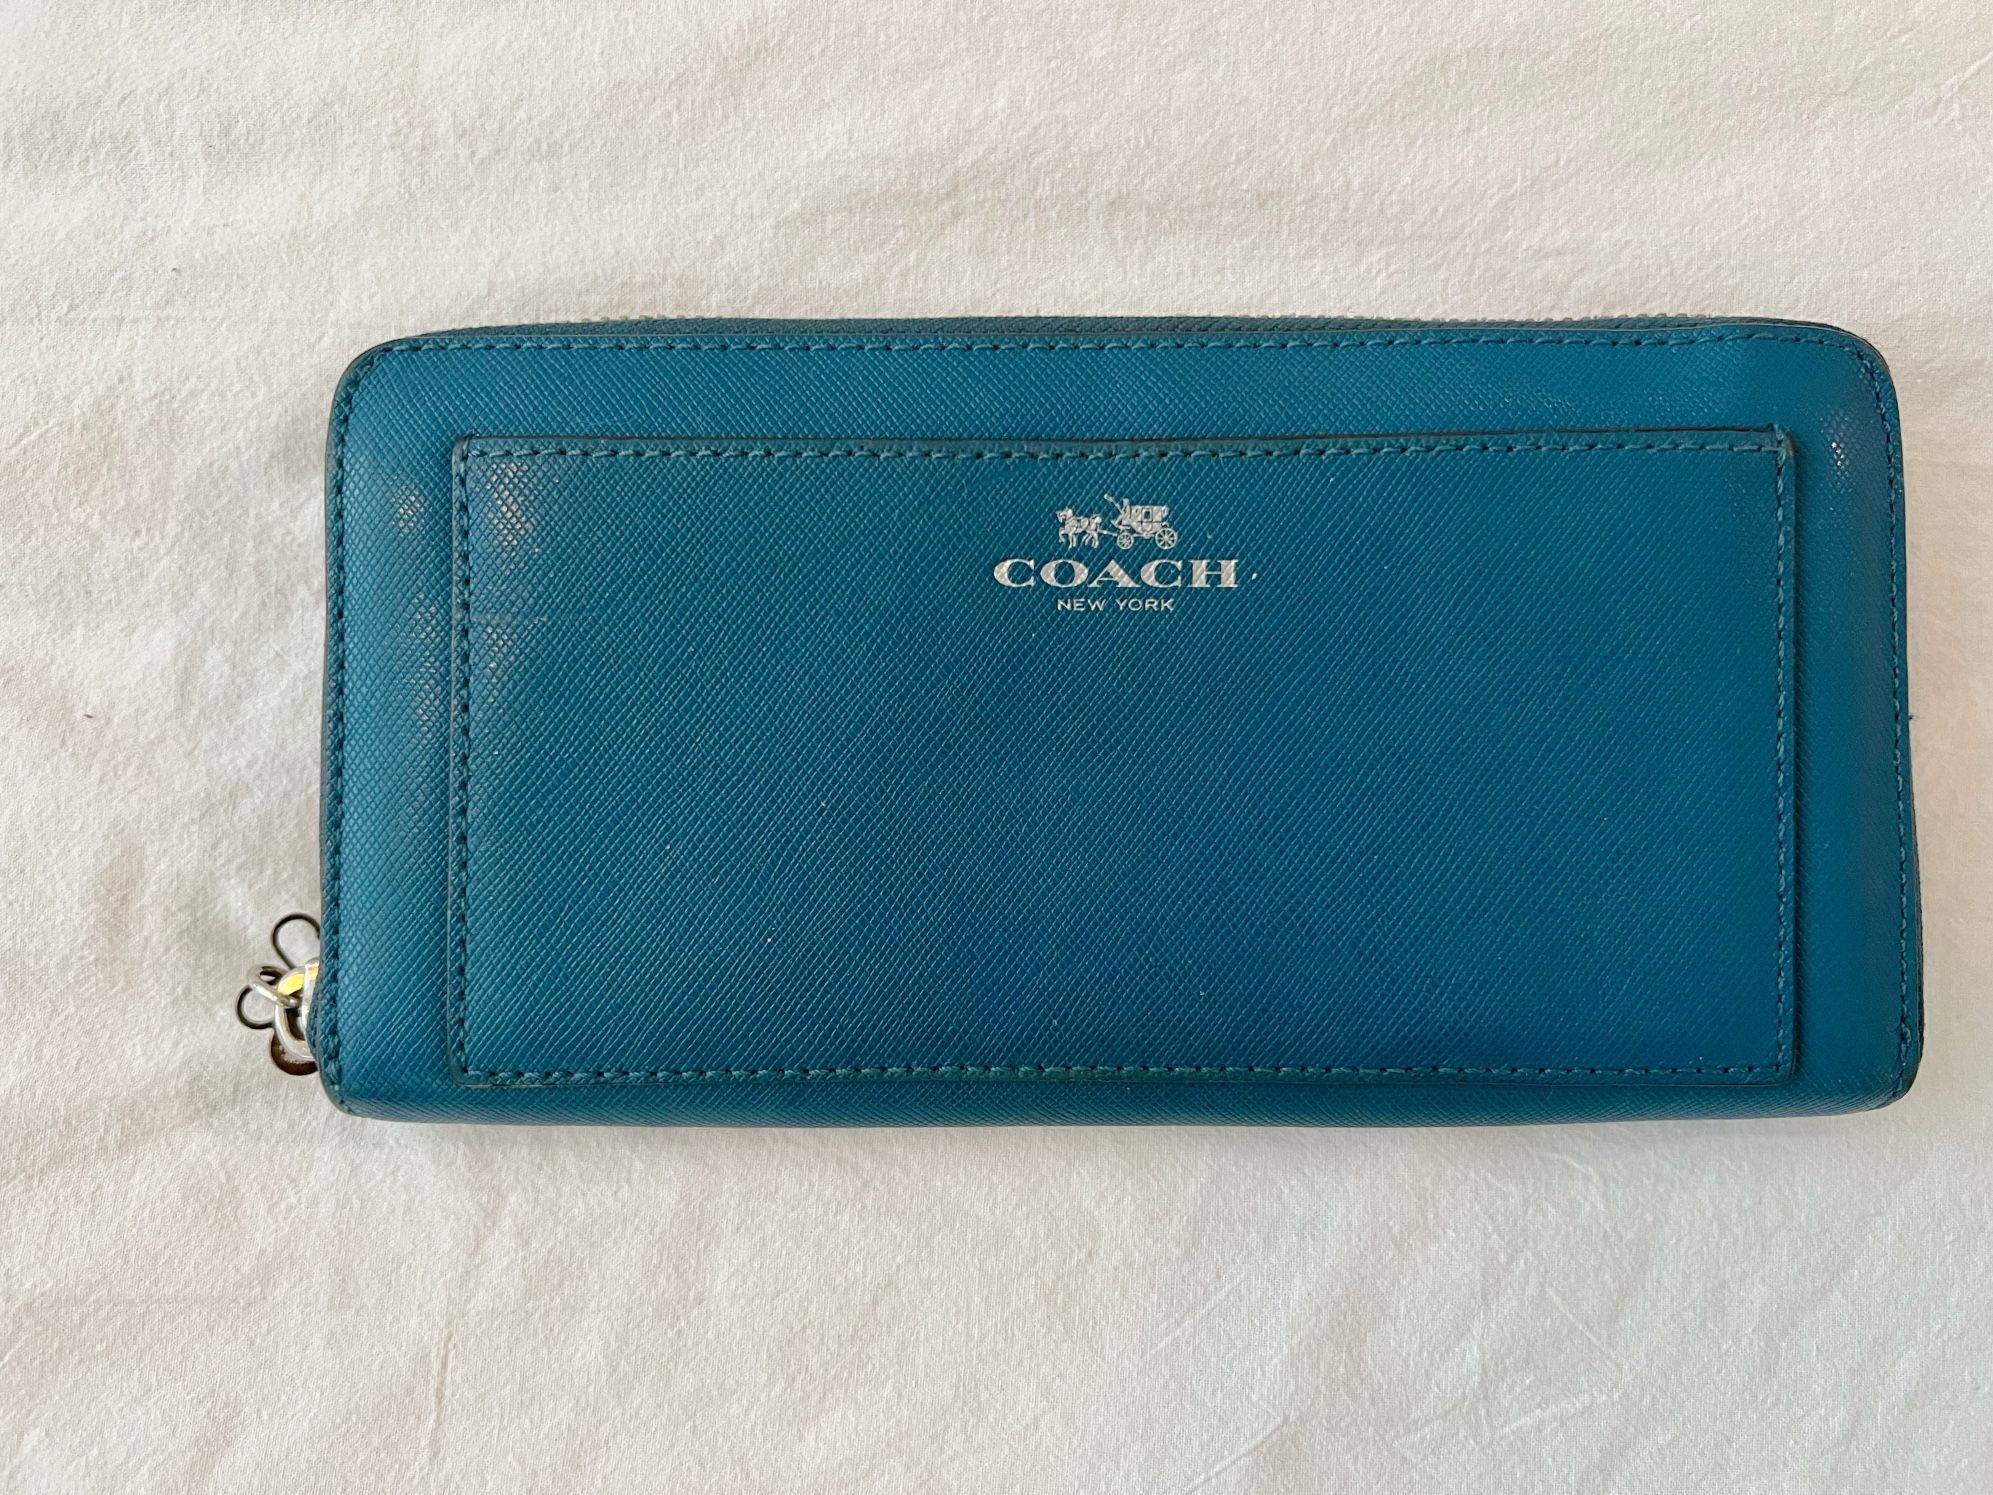 Teal Blue COACH Crossgrain Leather Wallet - Authentic, Excellent Condition 